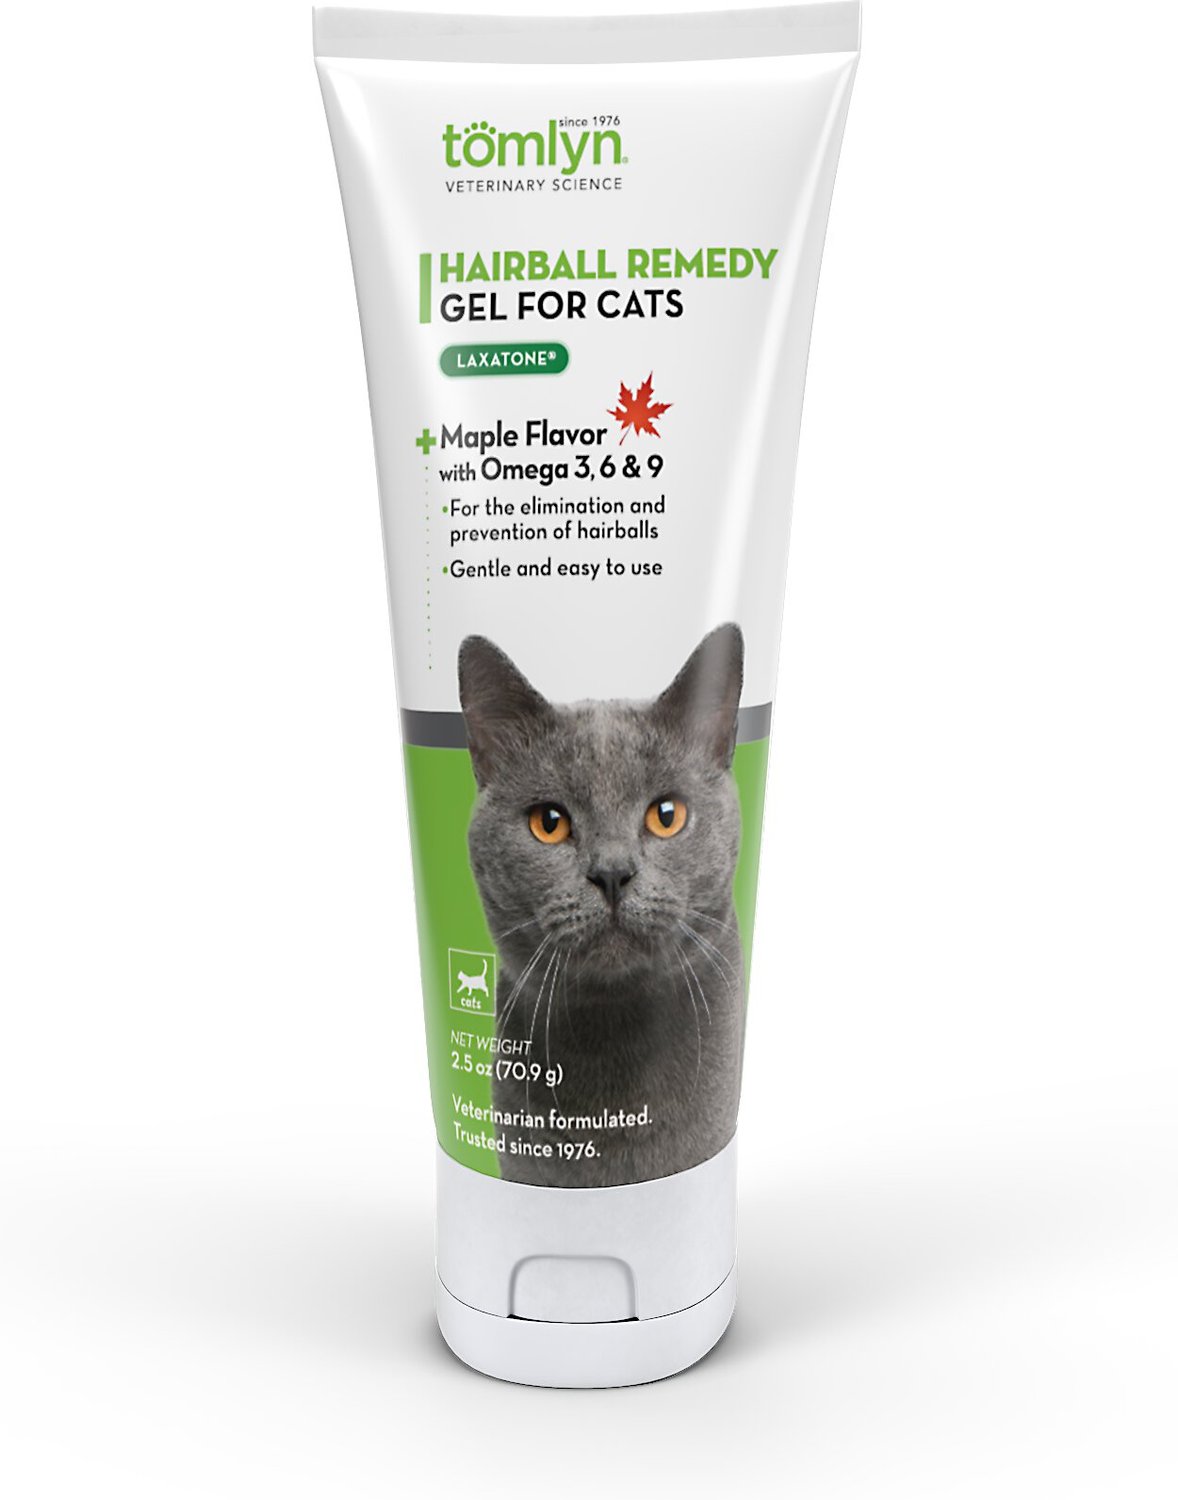 TOMLYN Laxatone Hairball Remedy Maple Flavor Gel Cat Supplement, 2.5oz